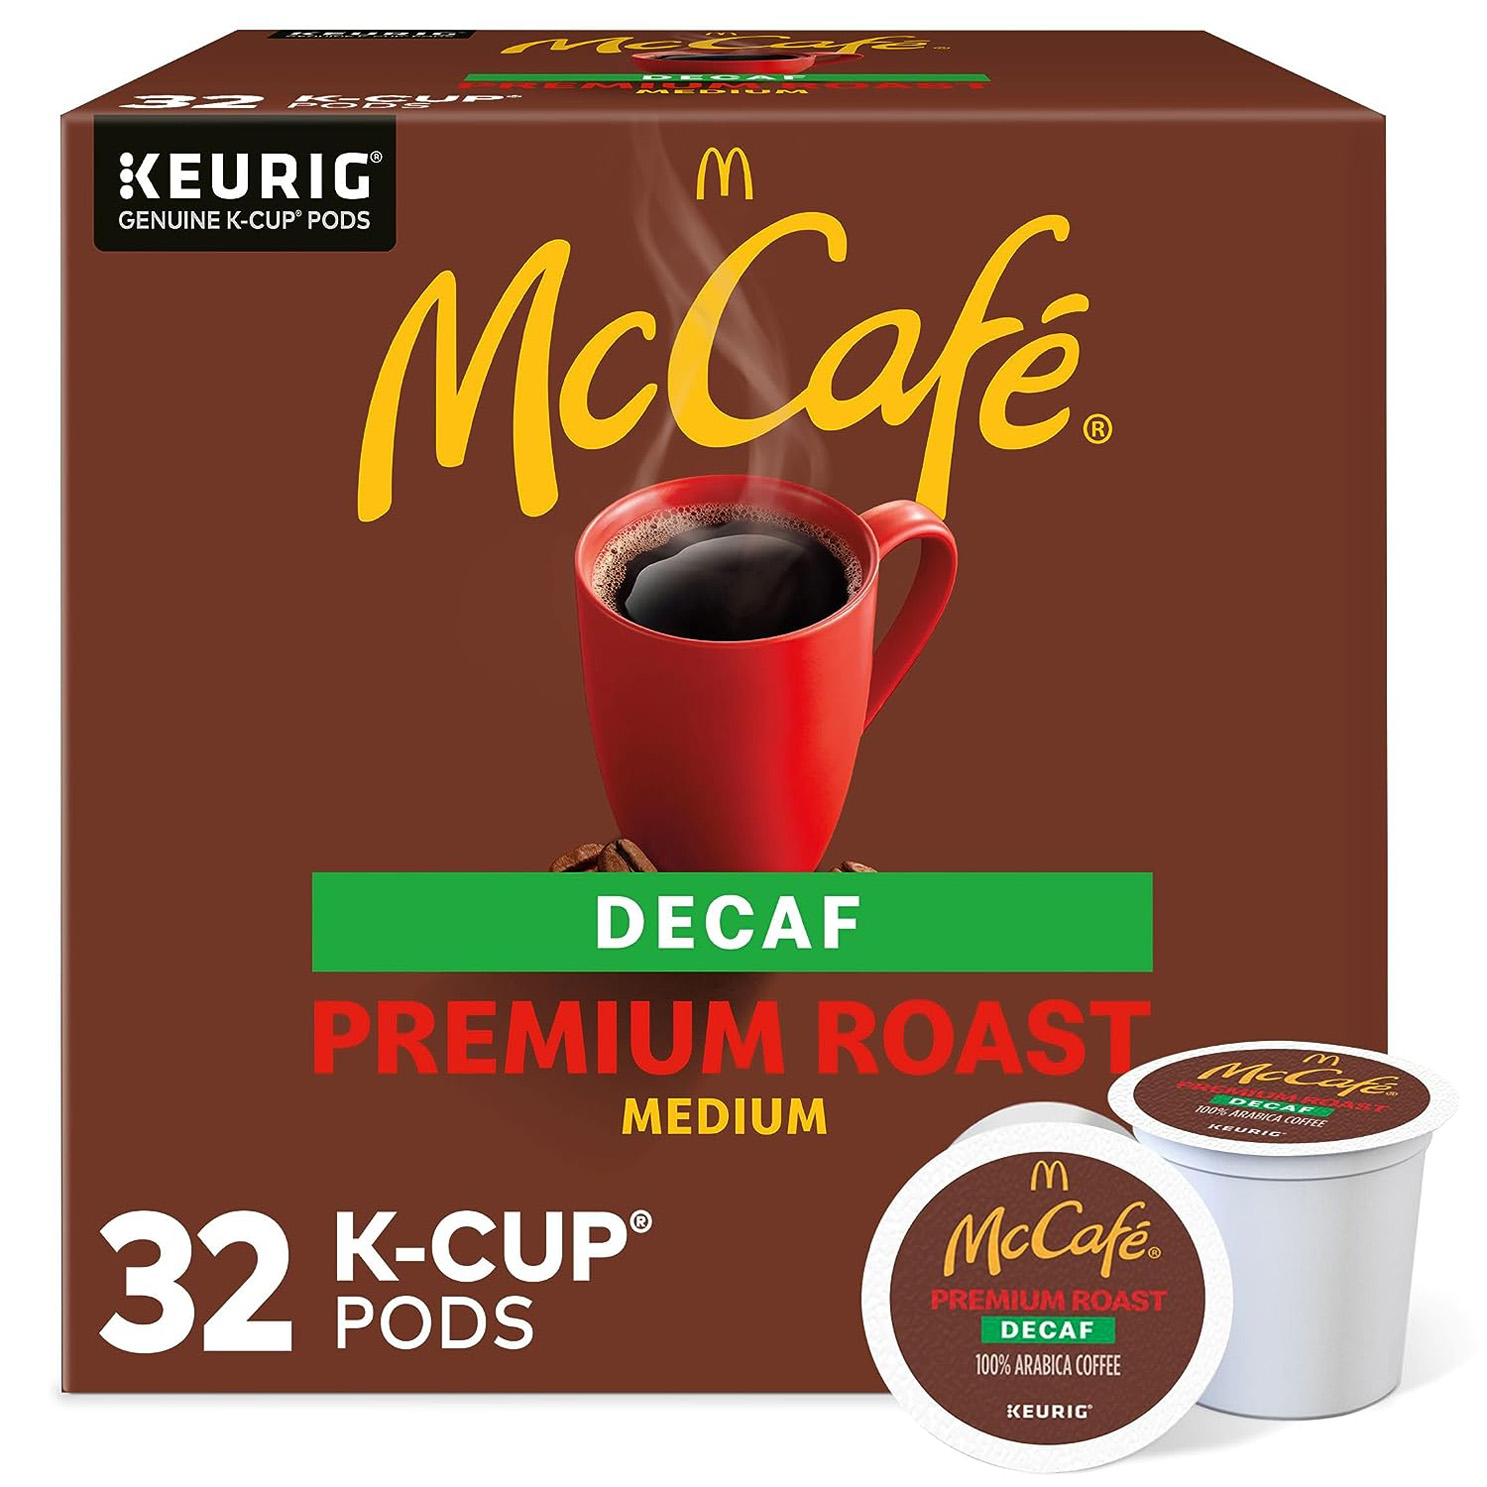 McCafe Keurig Single Serve K-Cup Coffee Pods, Premium Roast Decaf, 32 Count